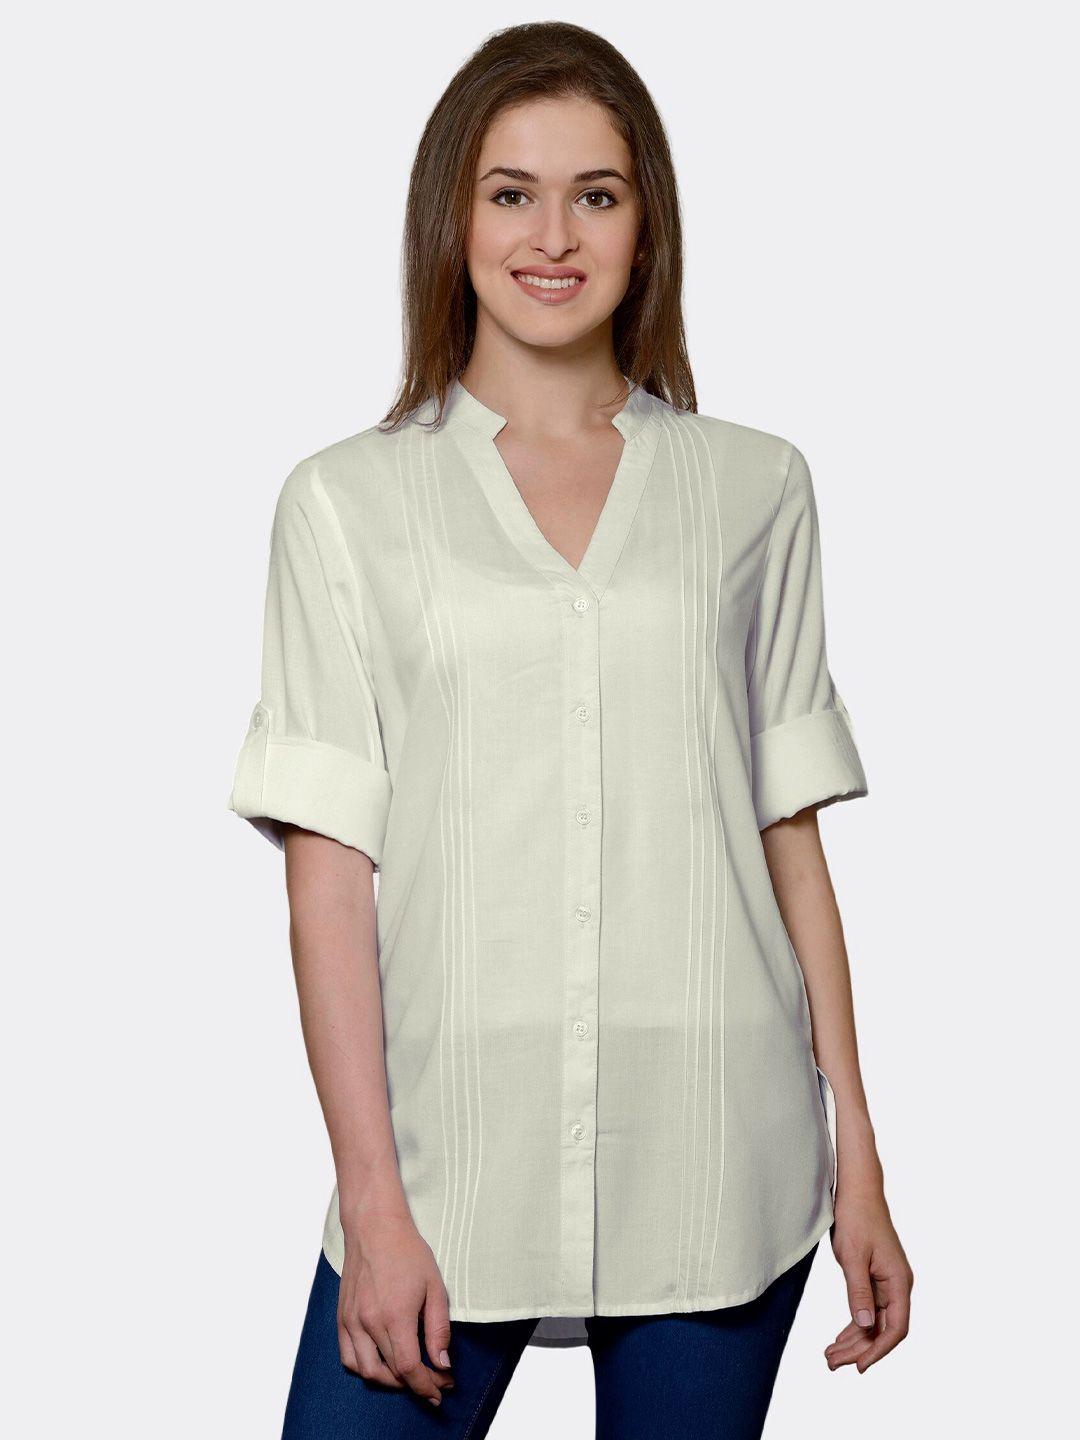 patrorna women off white comfort casual shirt